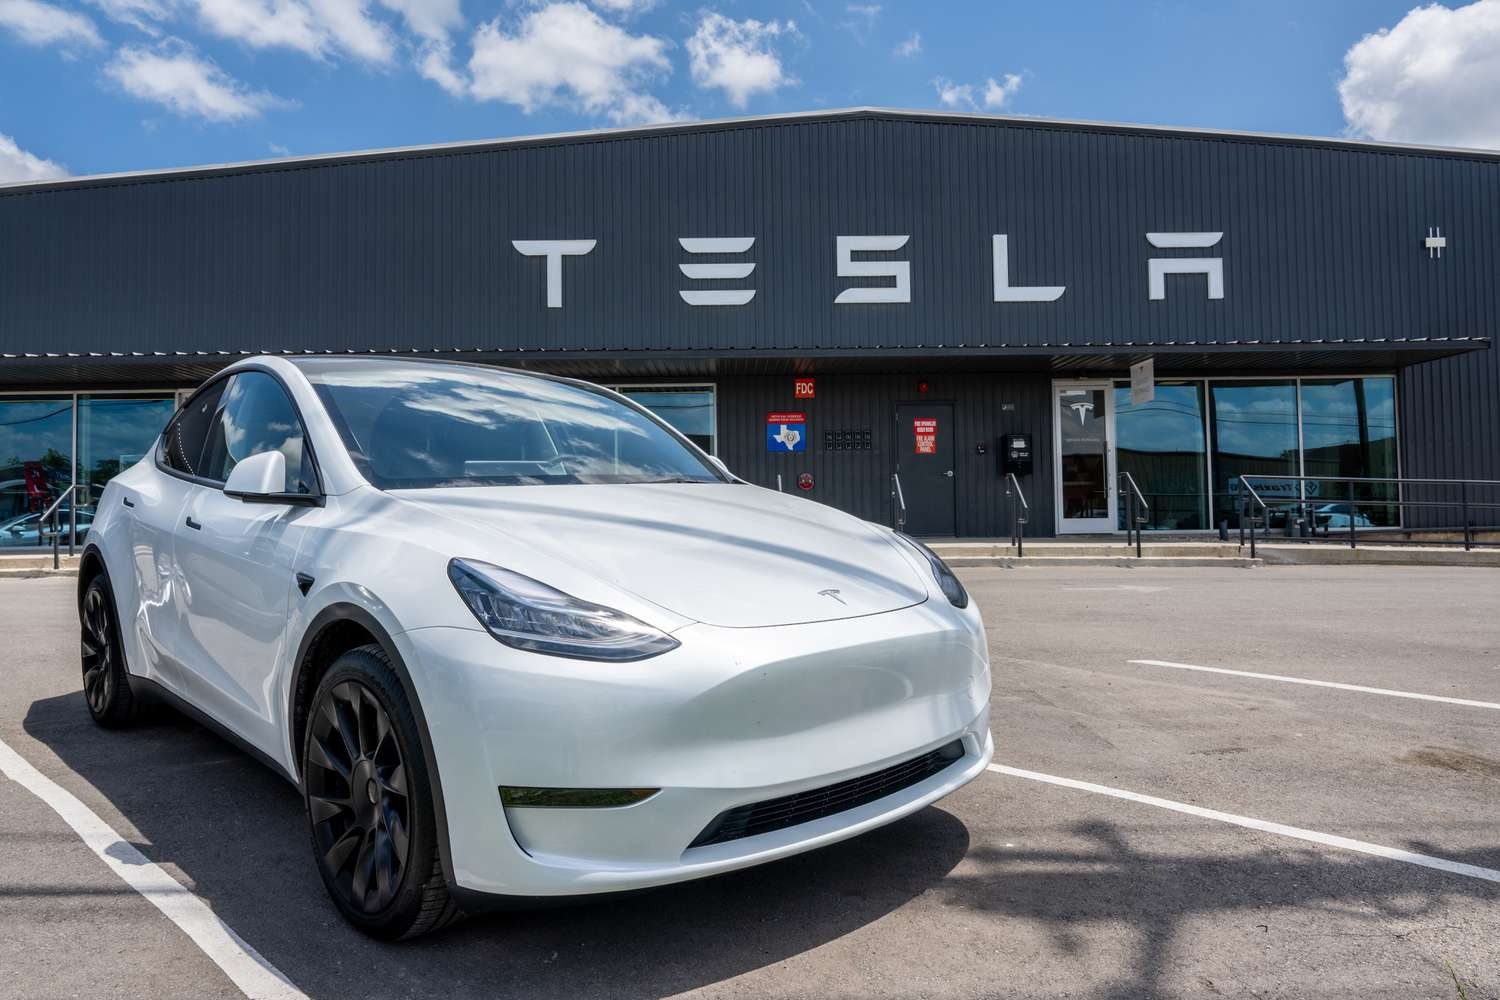 Tesla bullish on full self-driving cars